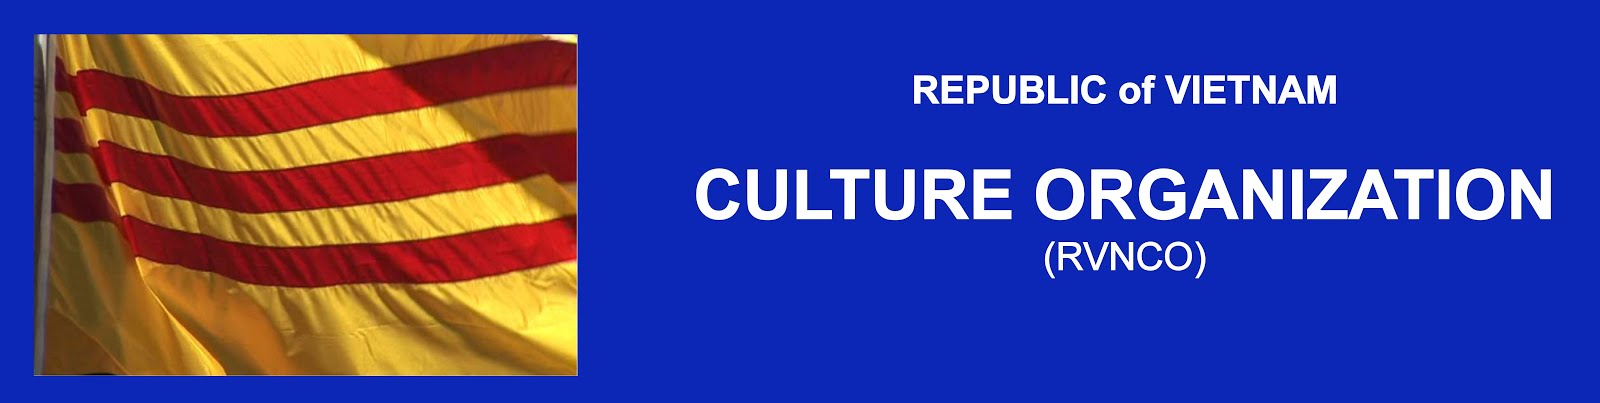 Republic of Vietnam Culture Organization